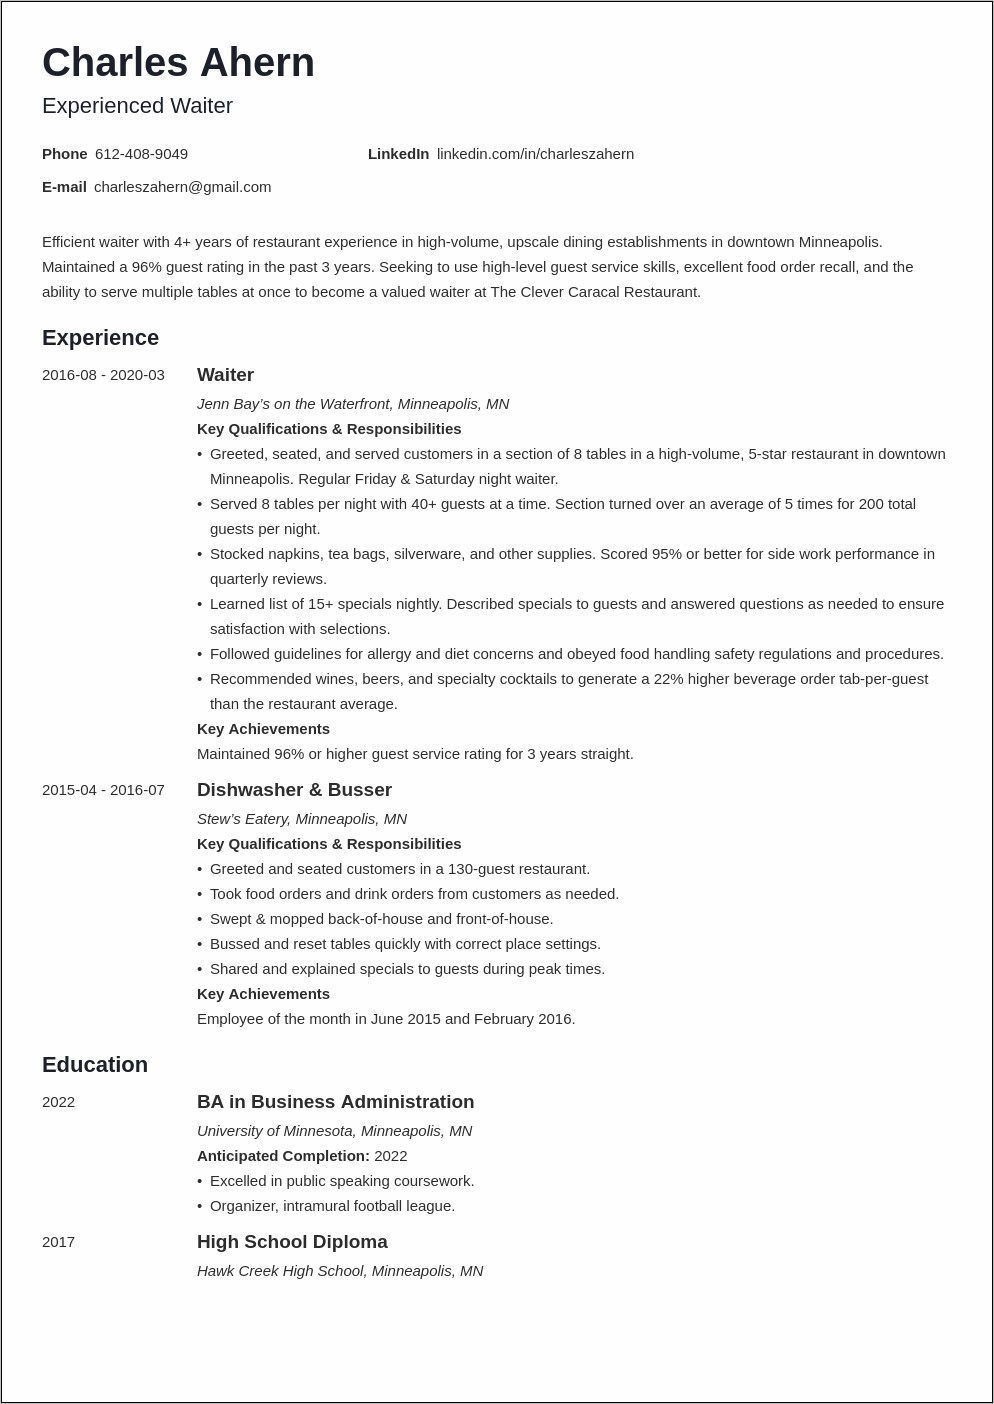 Job Description Vs Resume Score